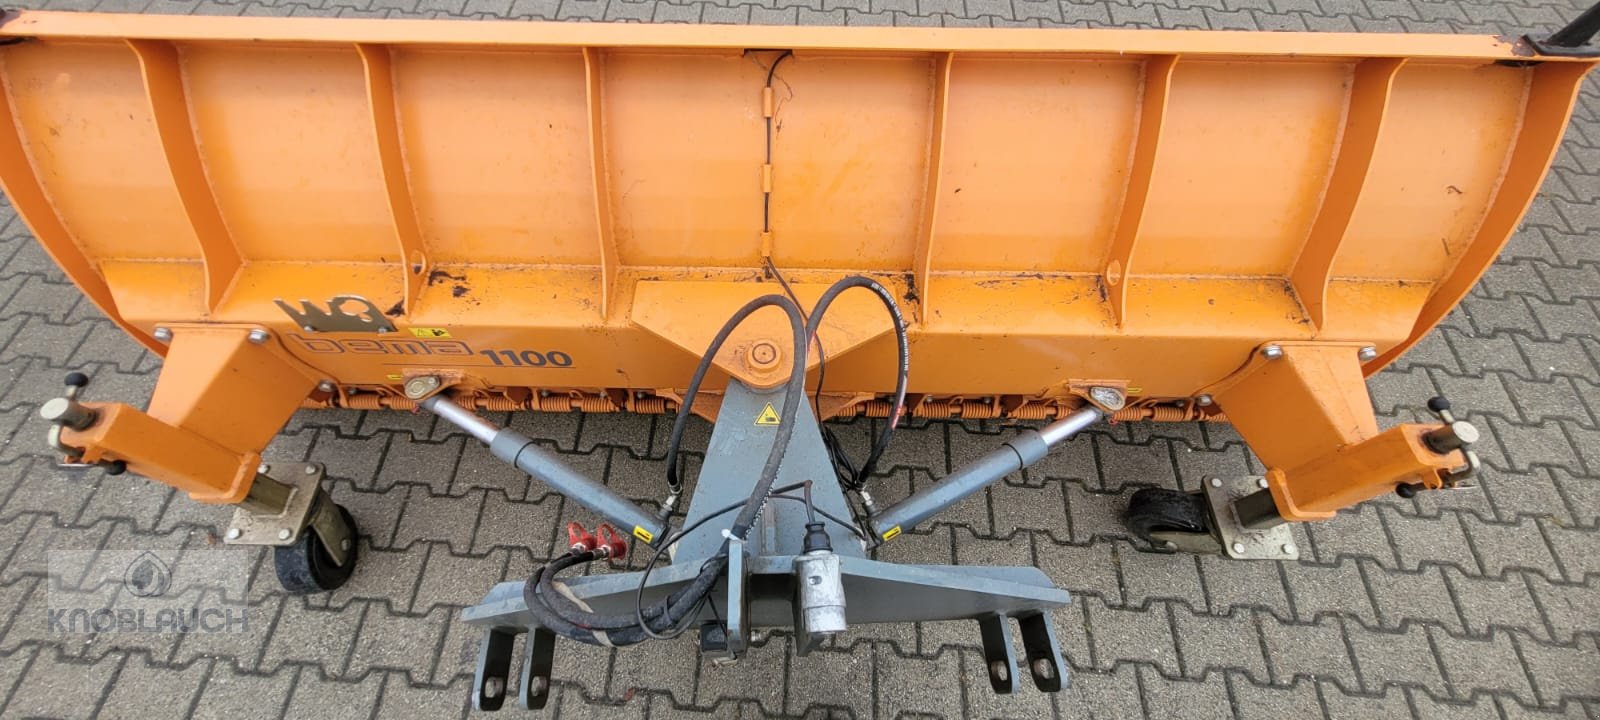 Schneepflug типа Bema 1100, Gebrauchtmaschine в Stockach (Фотография 5)